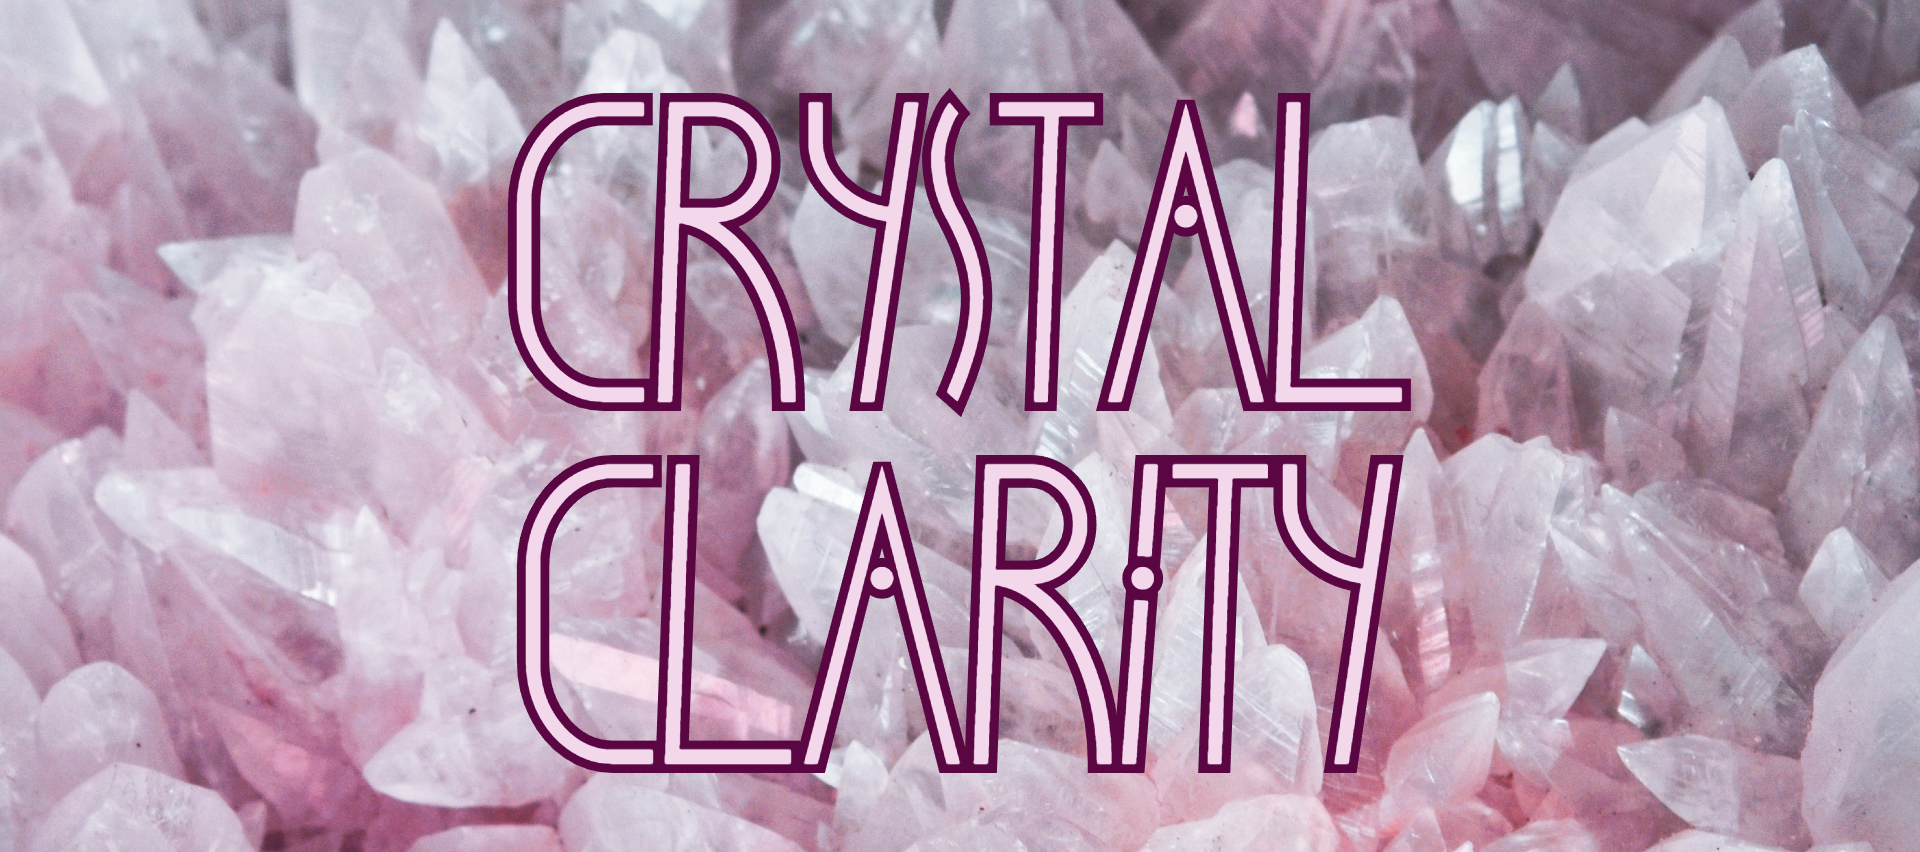 Crystal Clarity vol #11